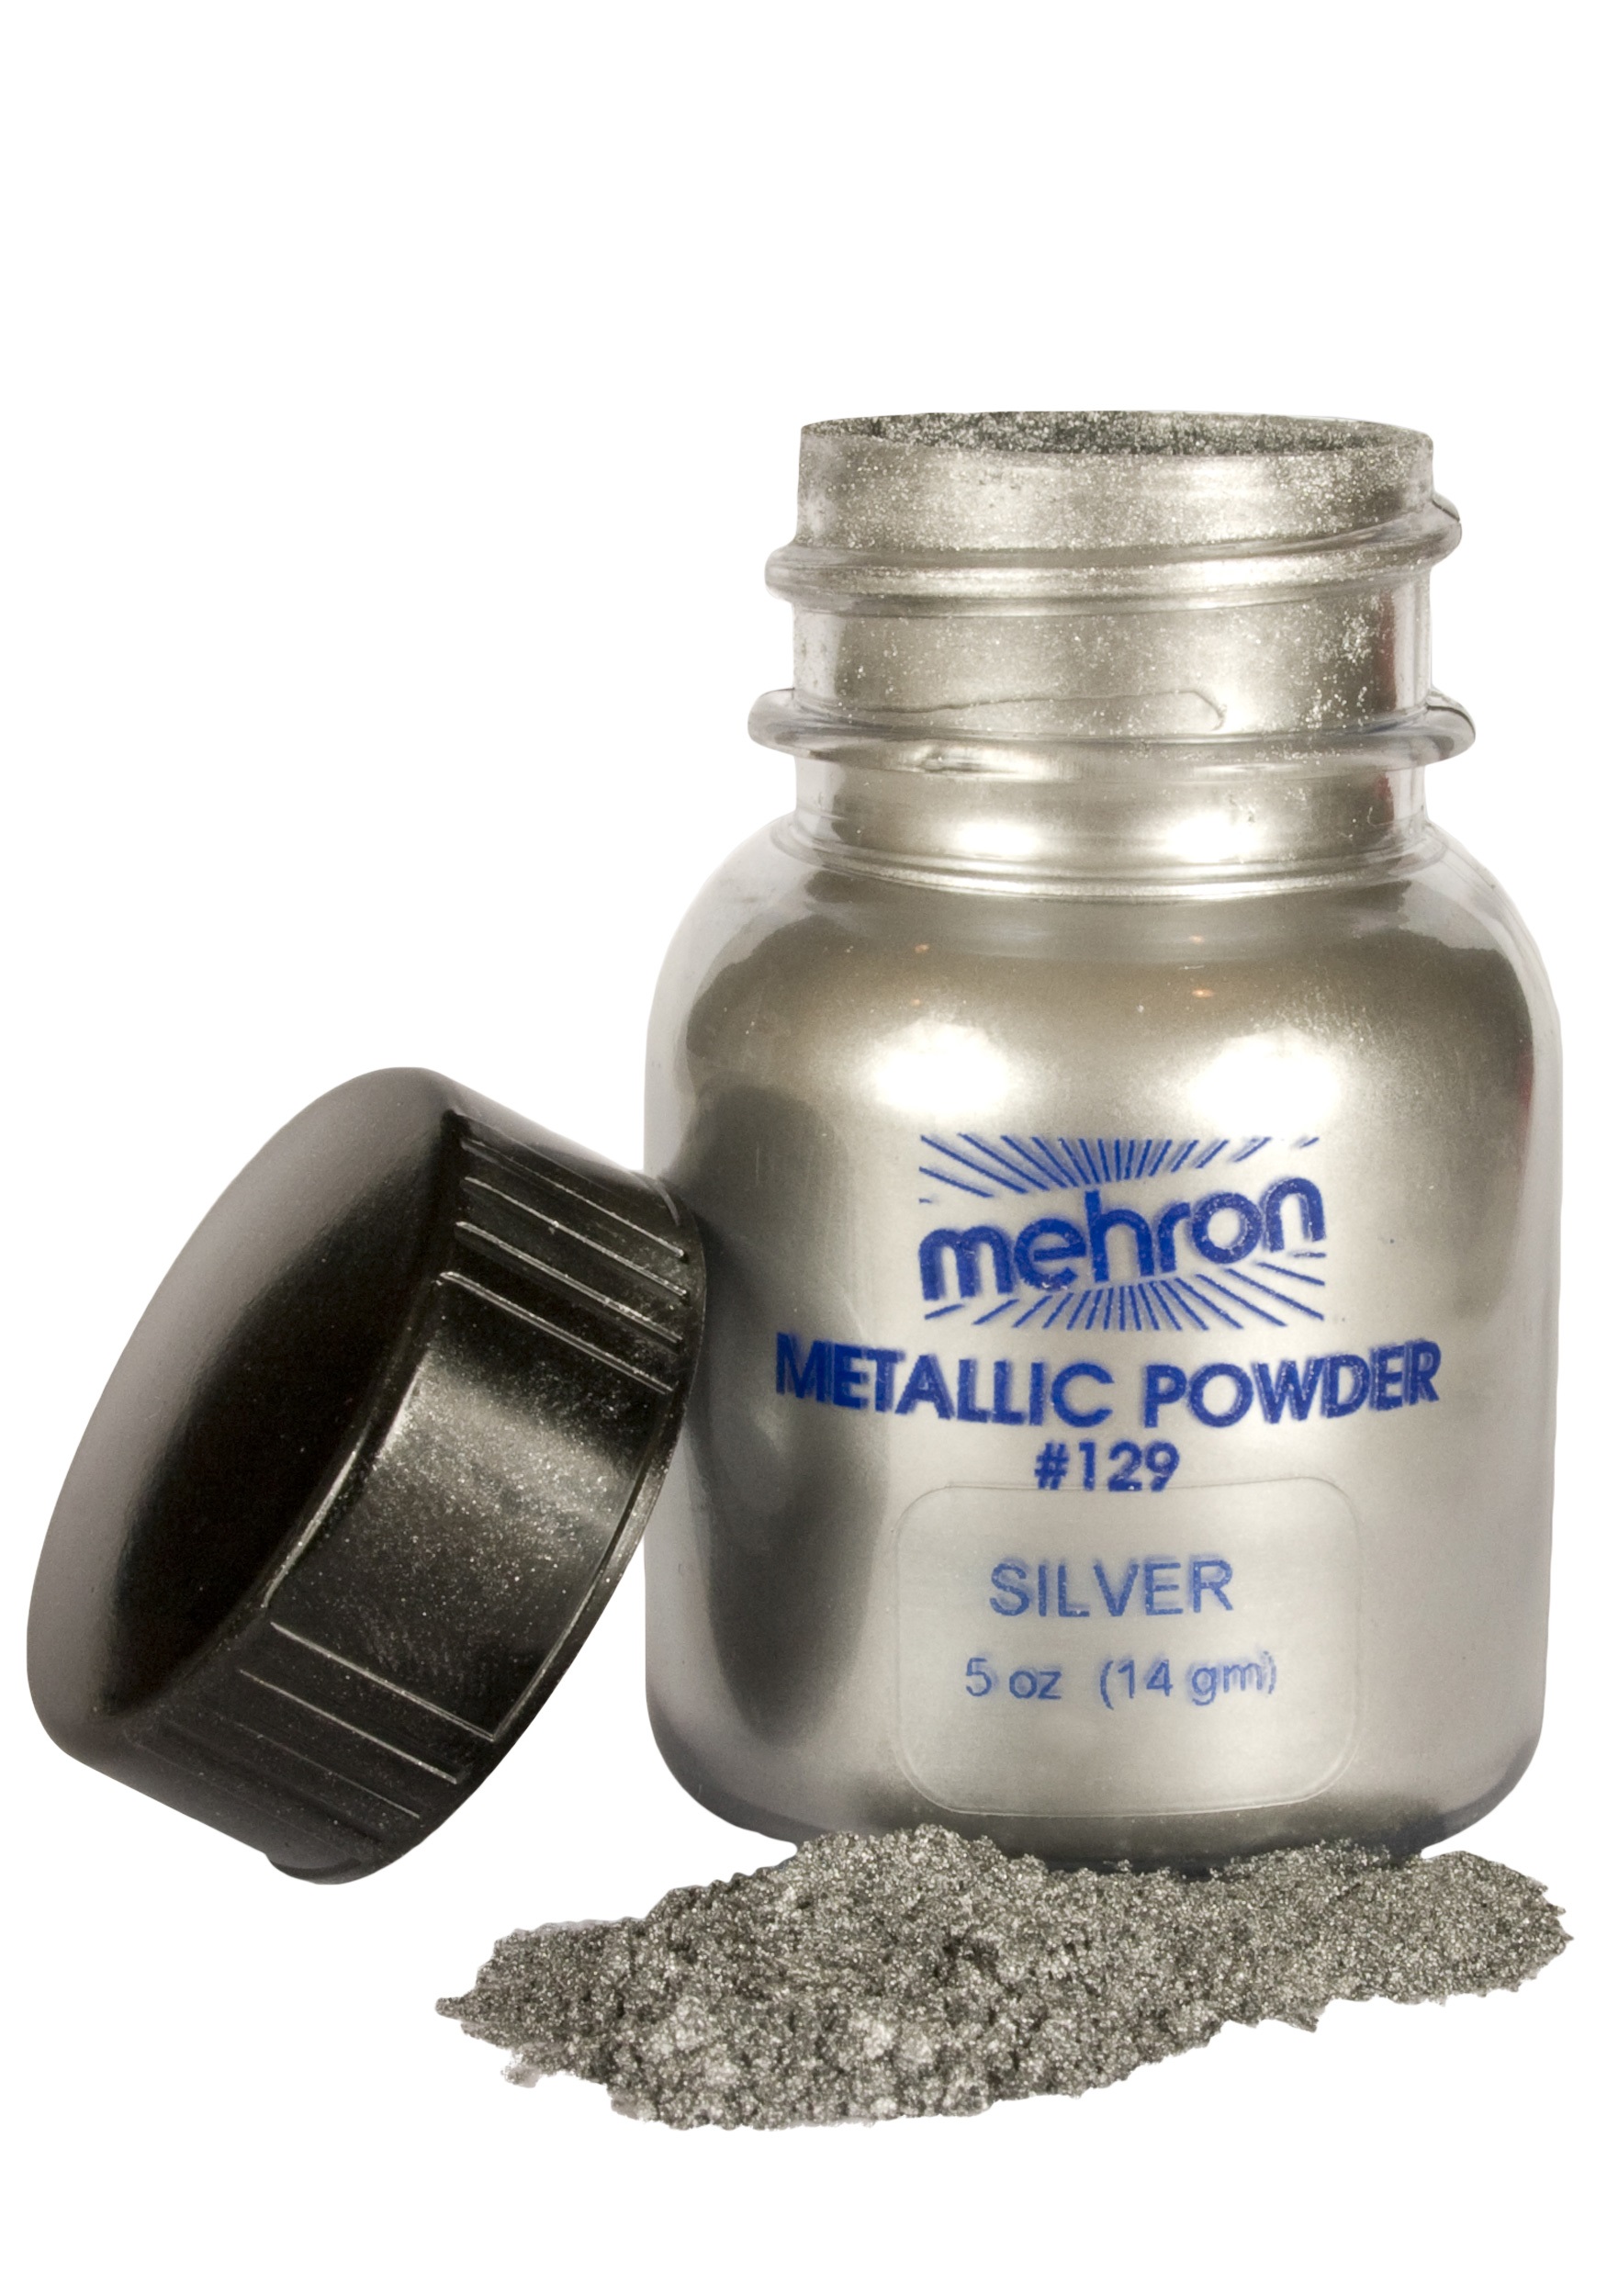 Mehron Silver Metallic Powder Makeup